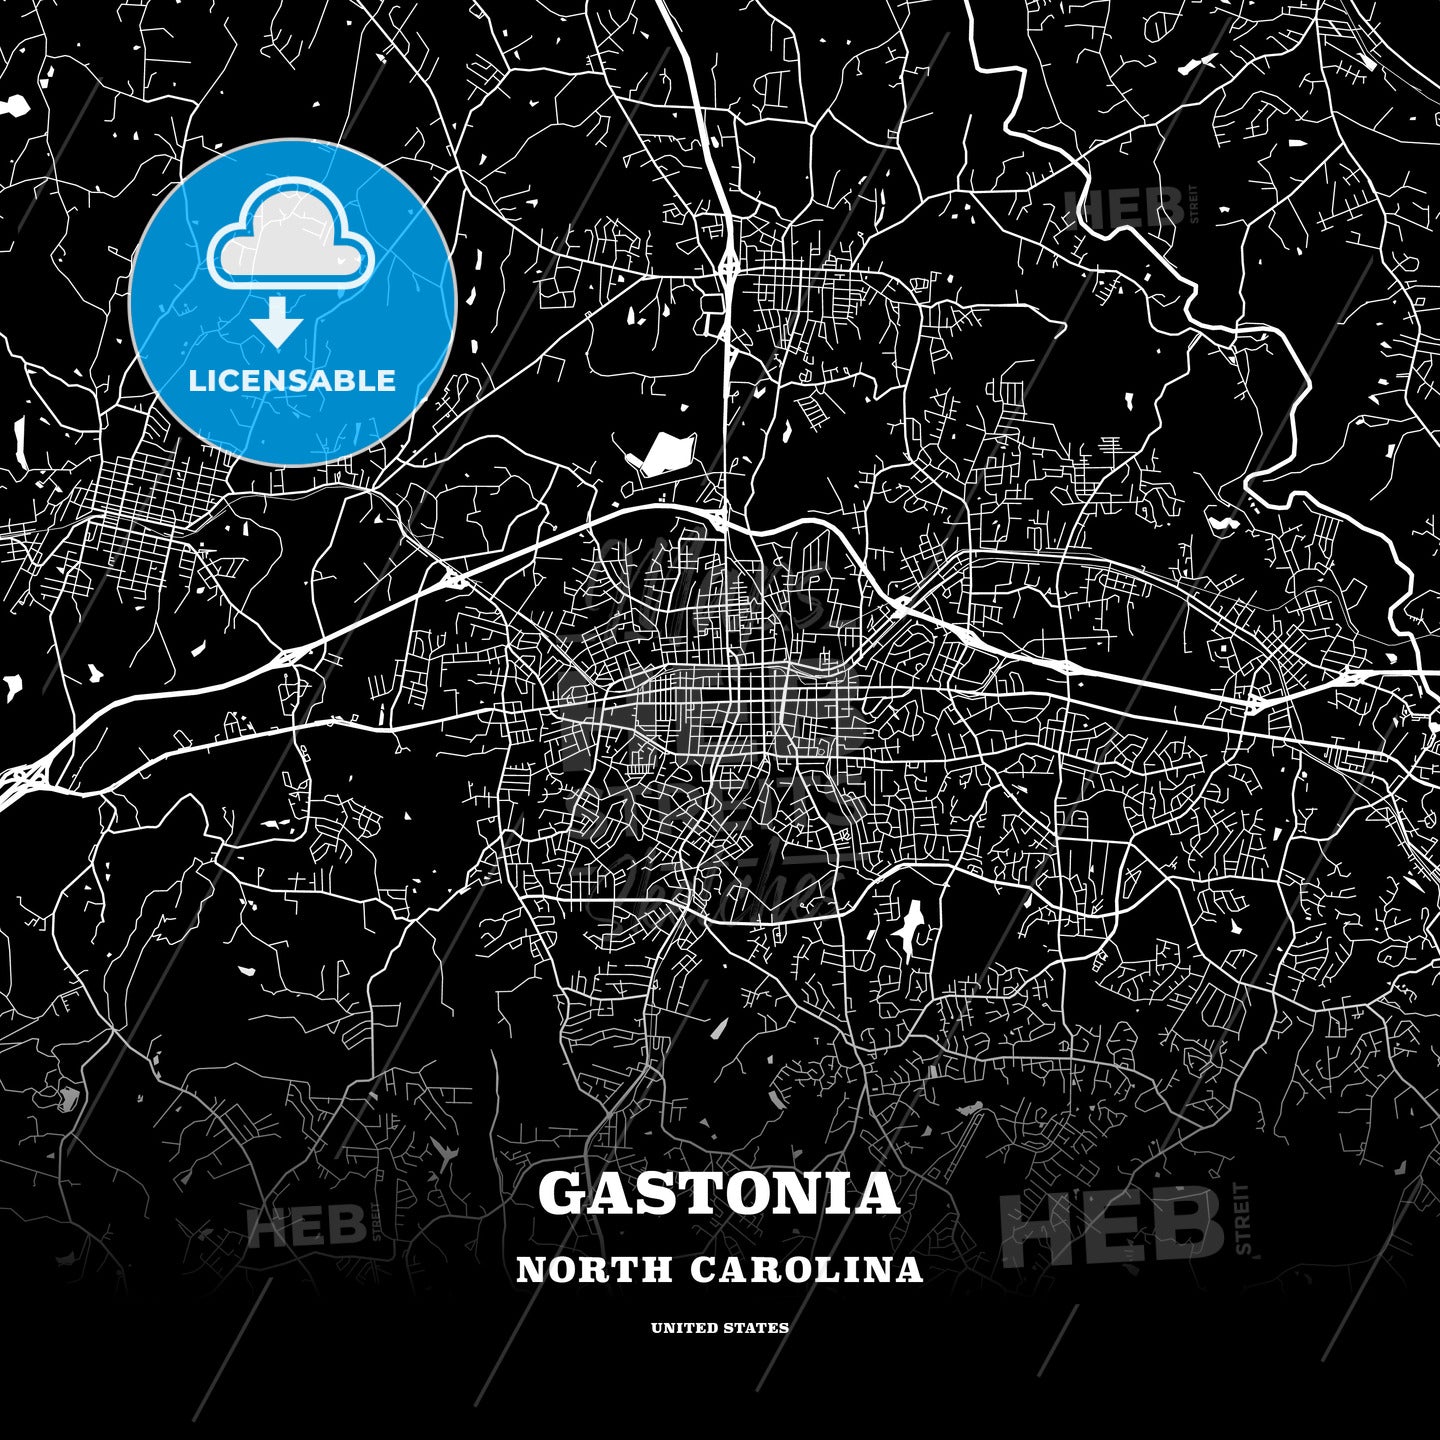 Gastonia, North Carolina, USA map